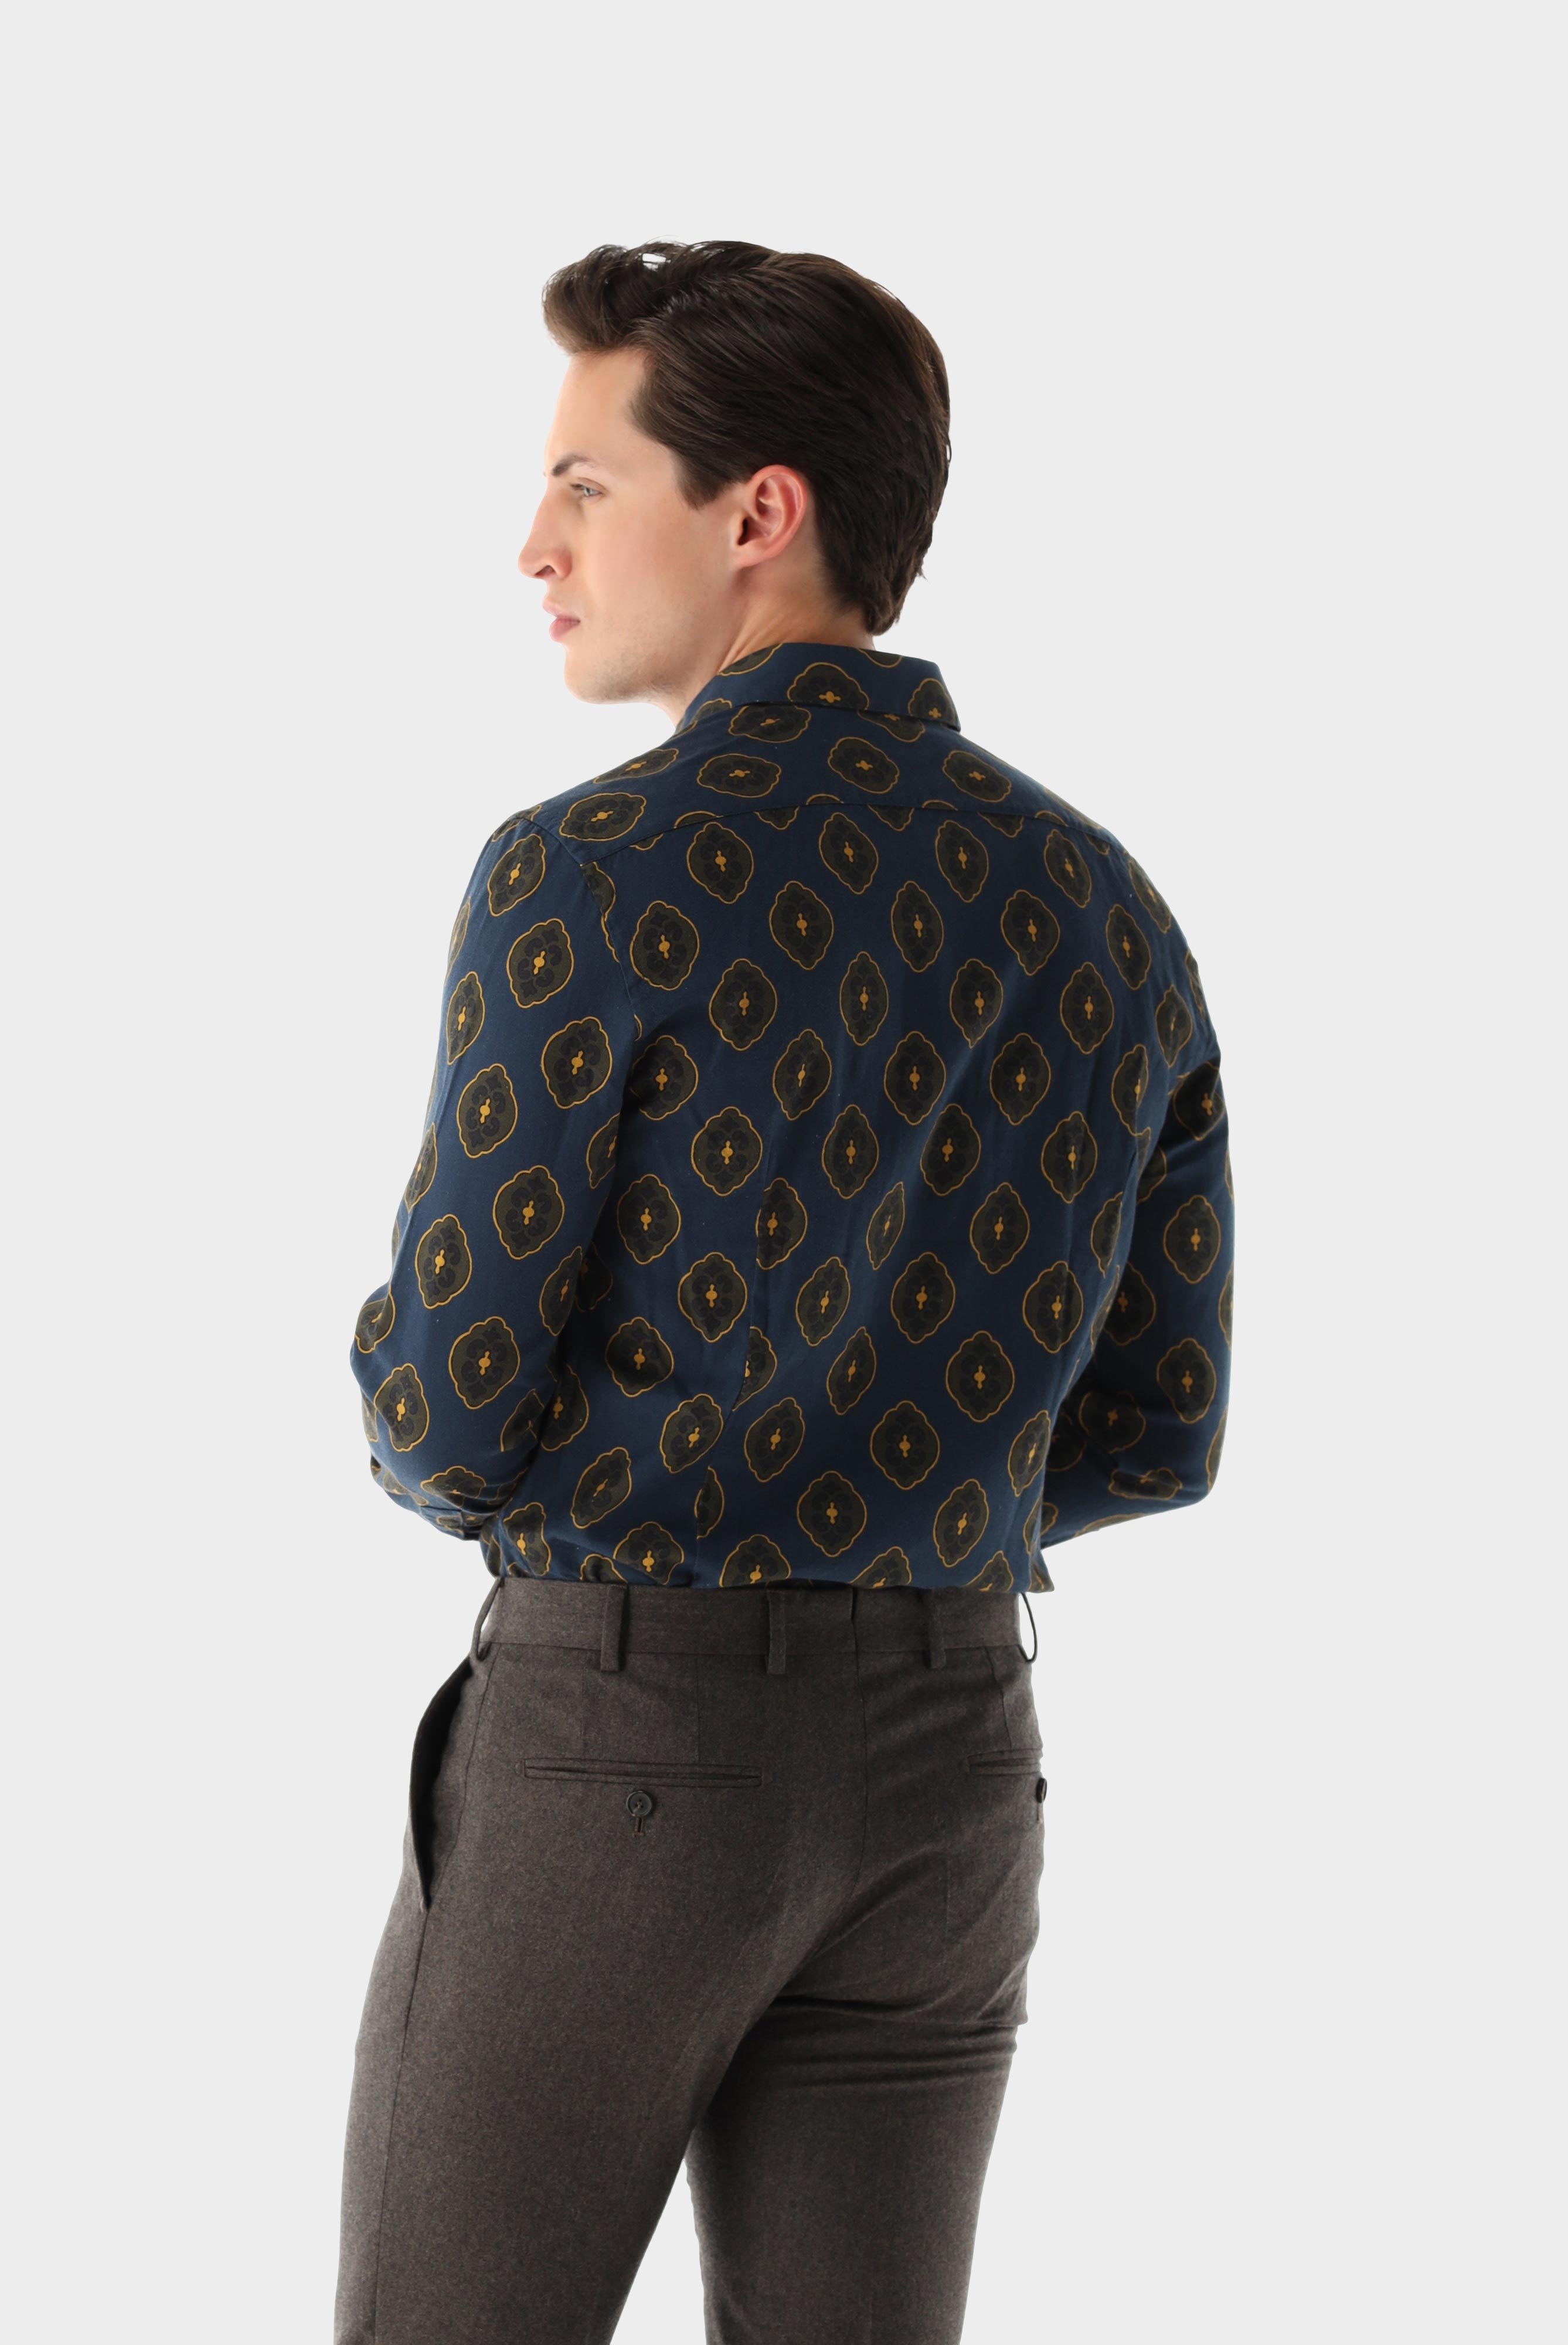 Casual Hemden+Vintage Twill Hemd Tailor Fit+20.2086.MB.172031.789.42